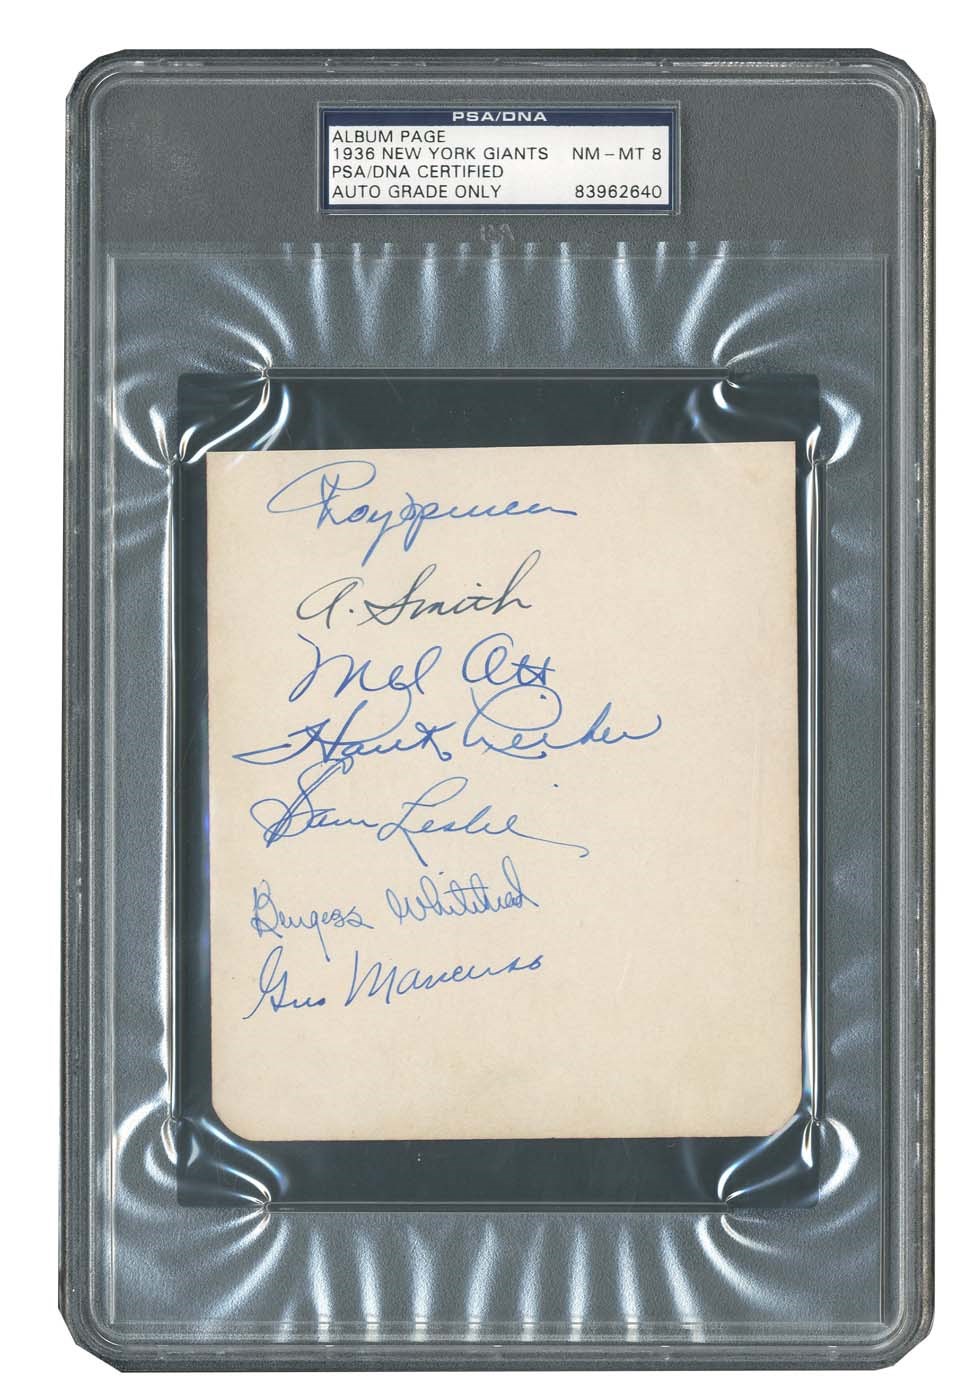 Baseball Autographs - 1936 NL Champion NY Giants Team-Signed Album Page with MINT Mel Ott (PSA NM-MT 8)